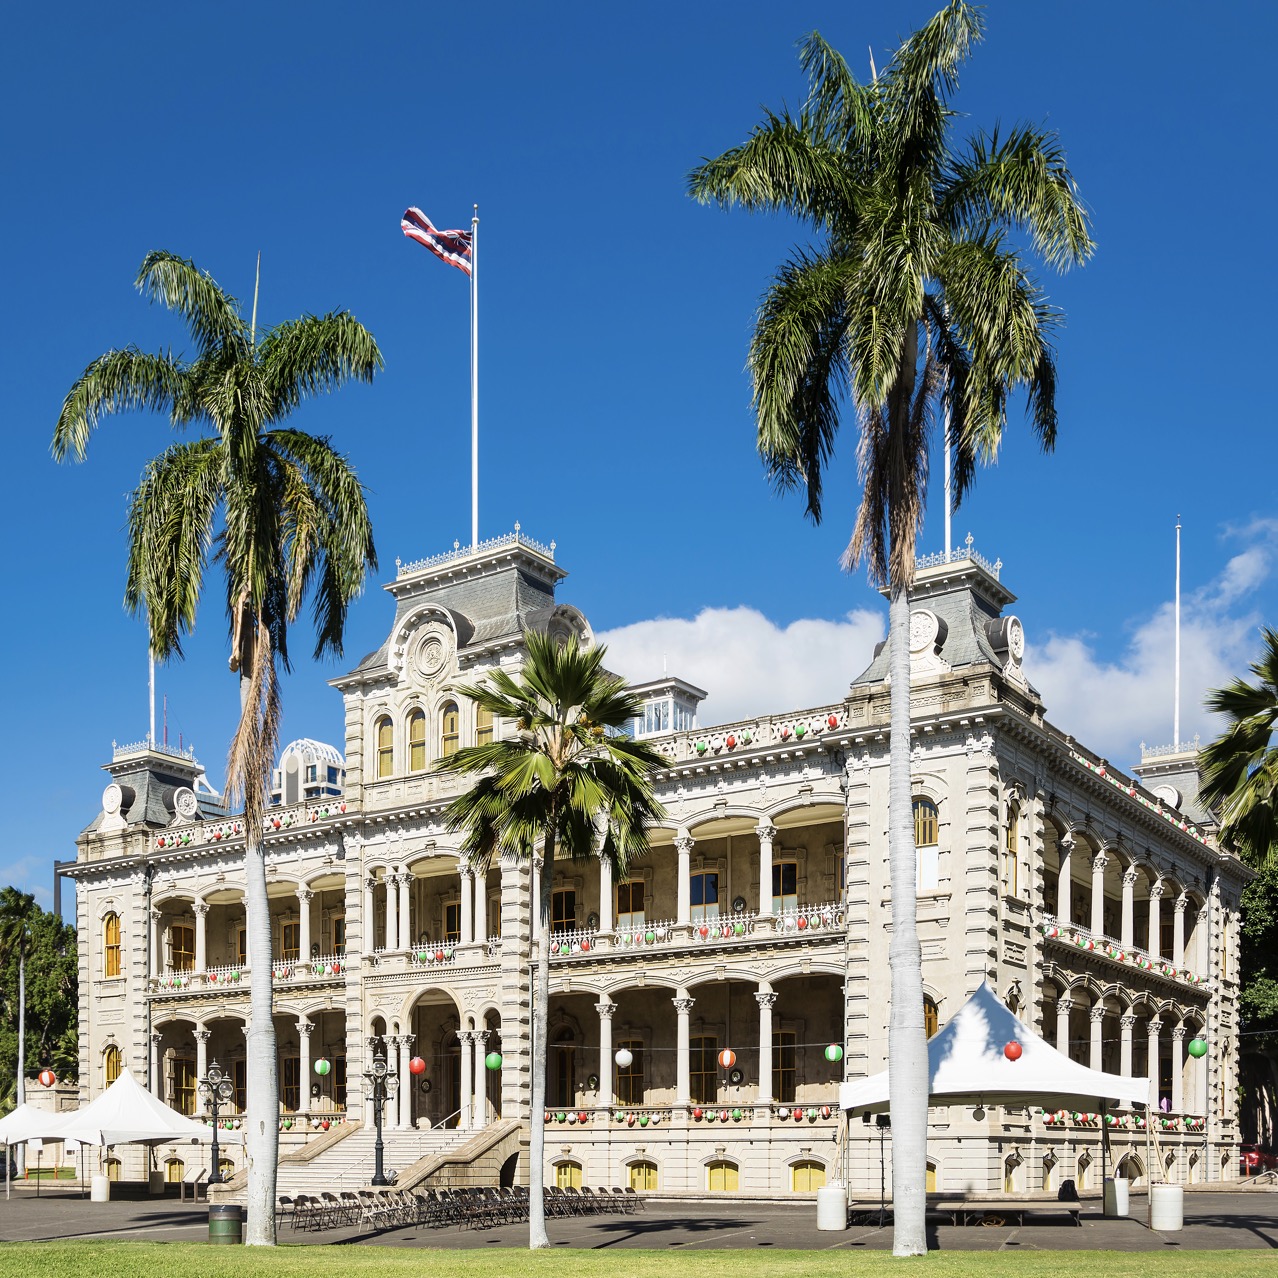 A Visit To Iolani Palace - Honolulu - Oahu